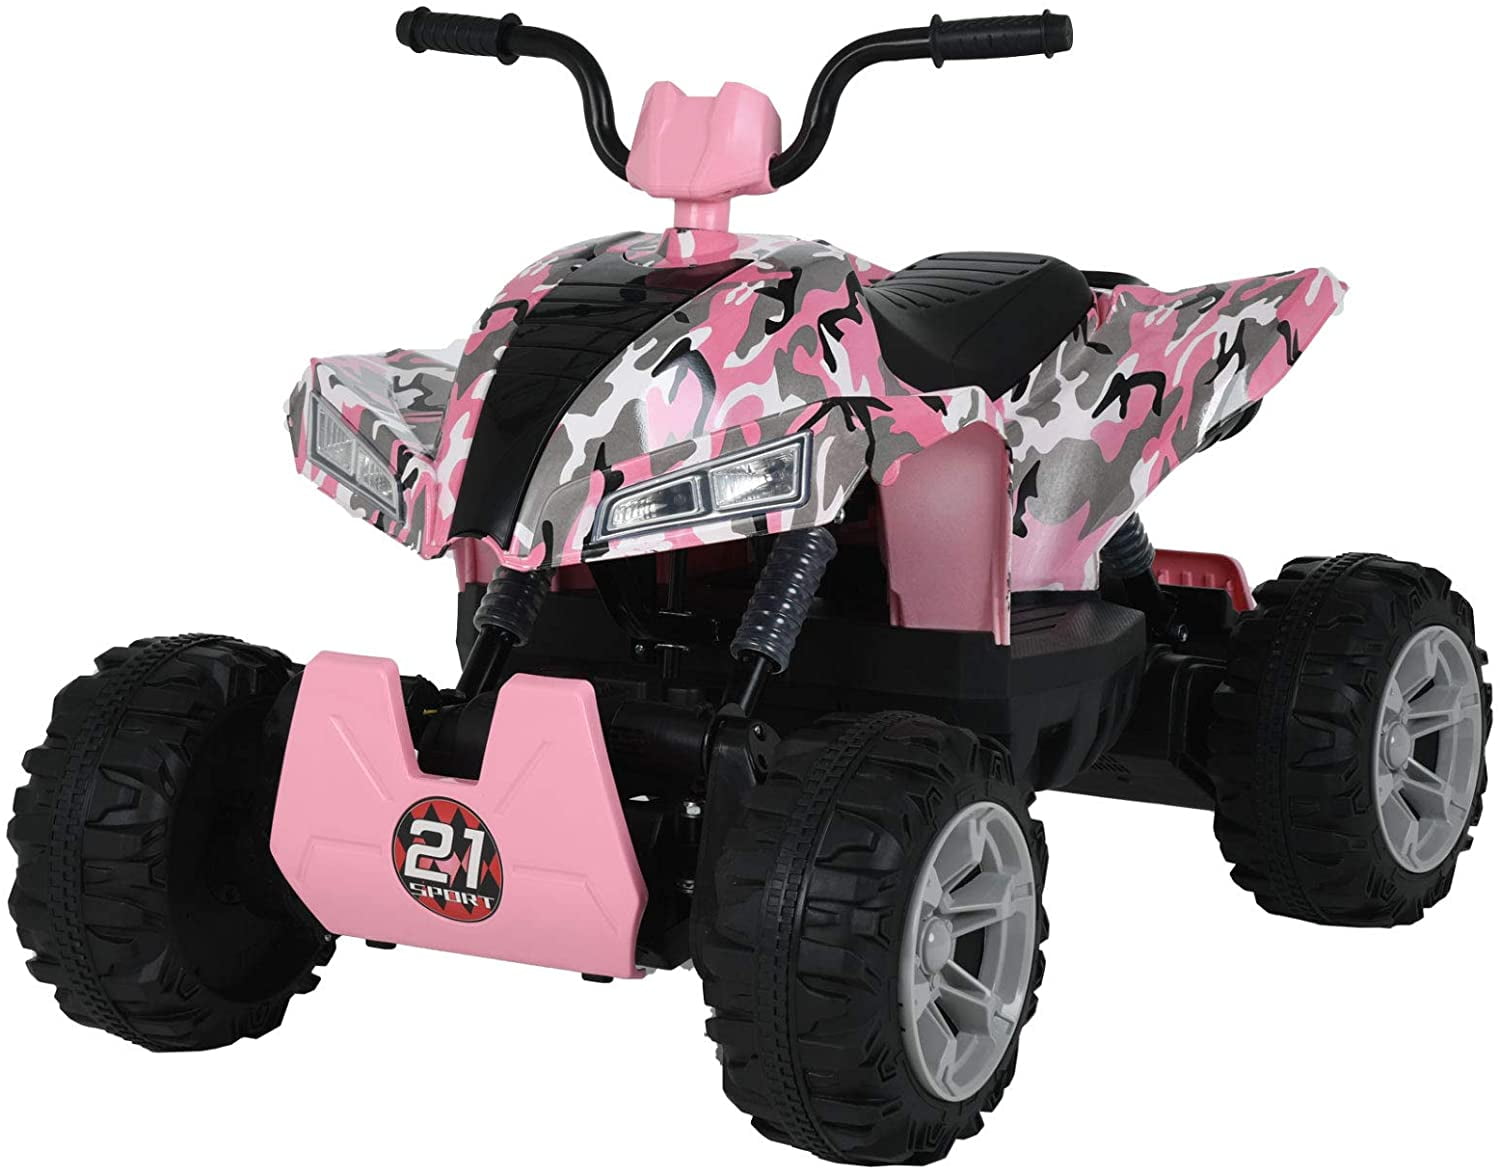 Uenjoy 24V Kids ATV 4 Wheeler Ride On Quad Battery Powered Electric ATV